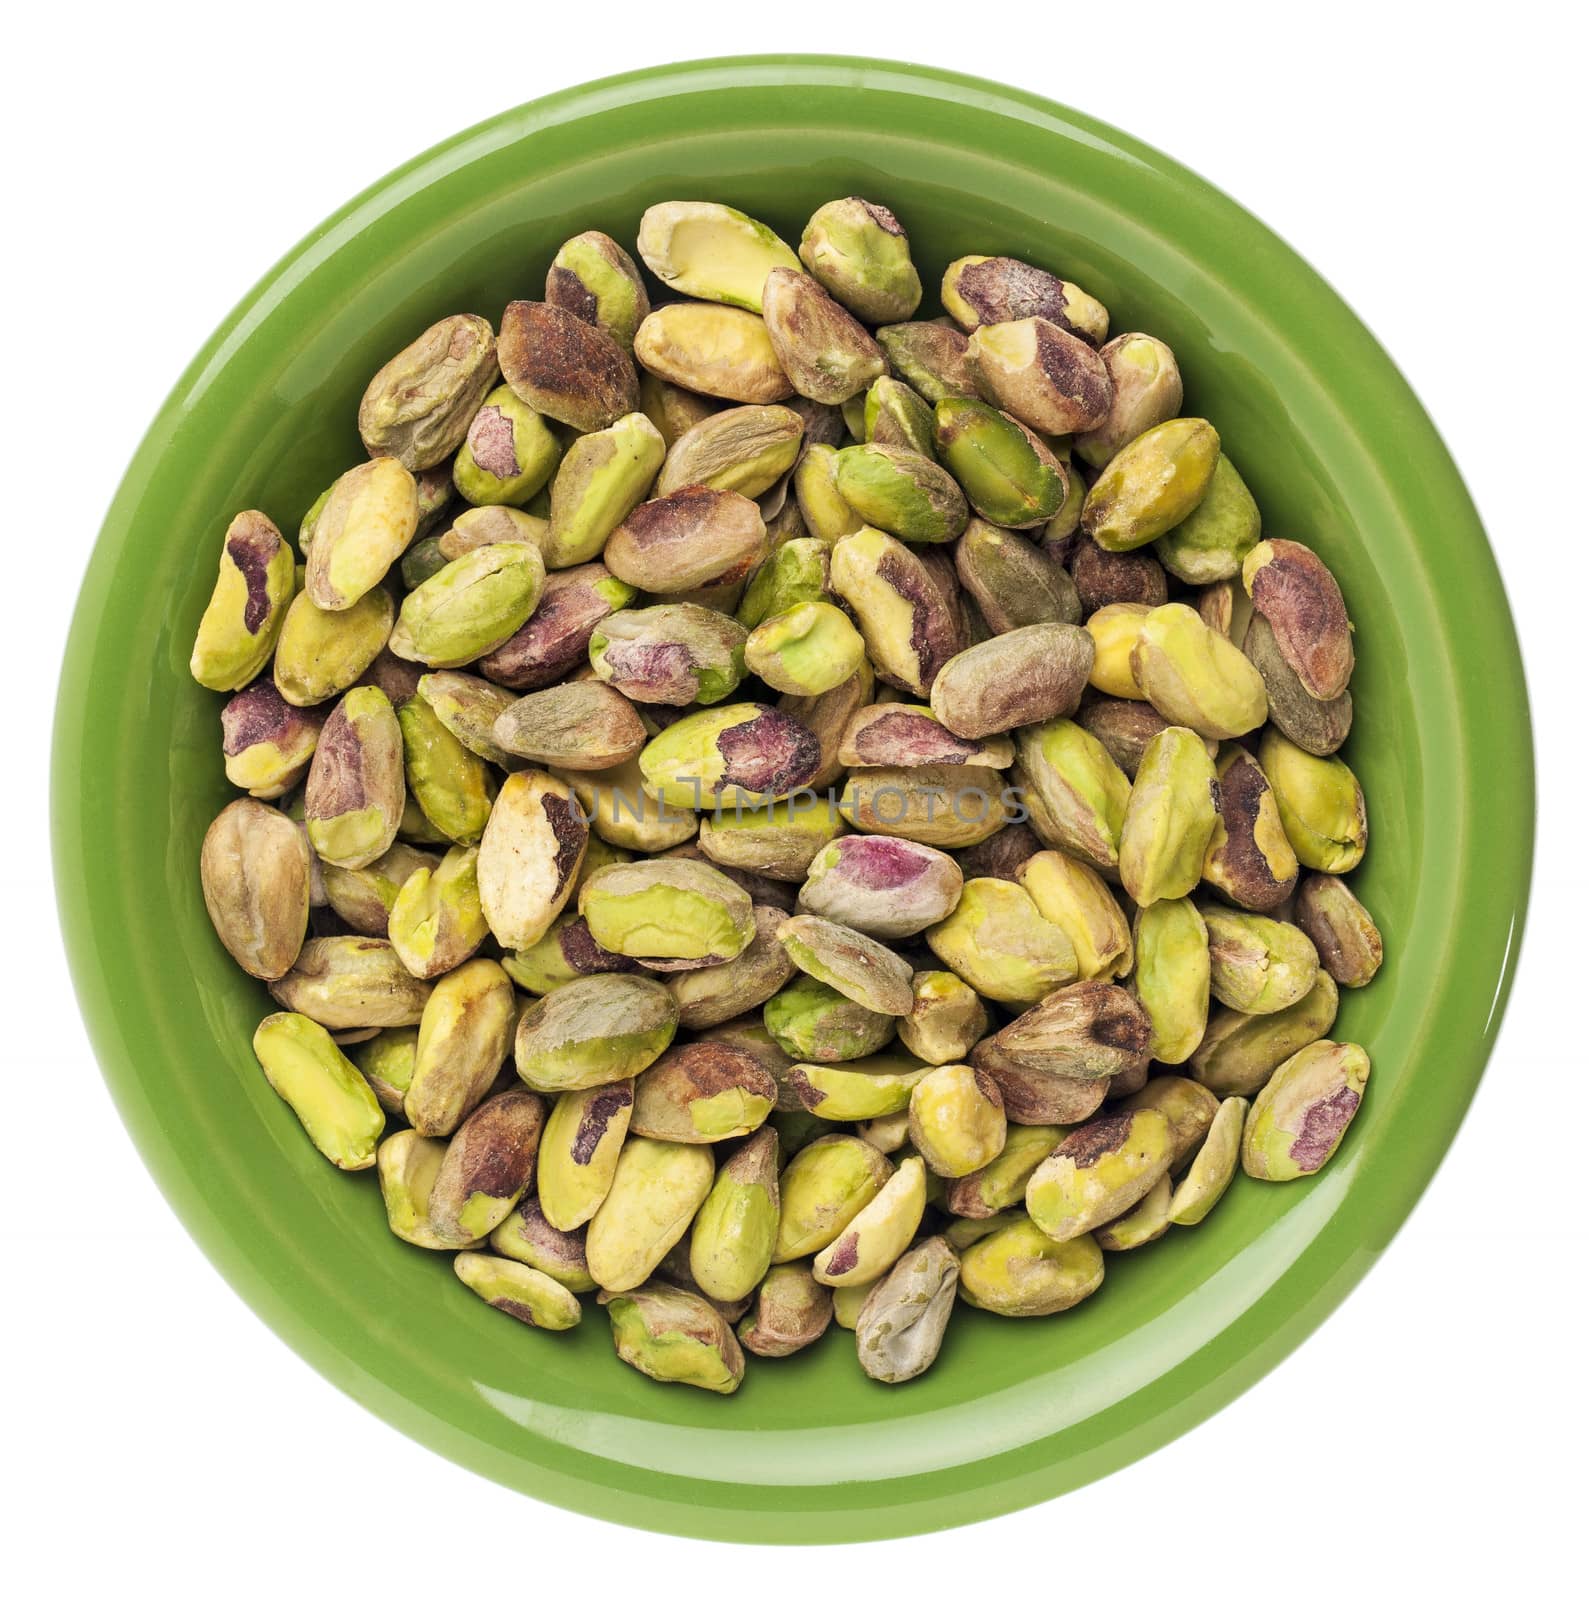 bowl of pistachio nuts by PixelsAway